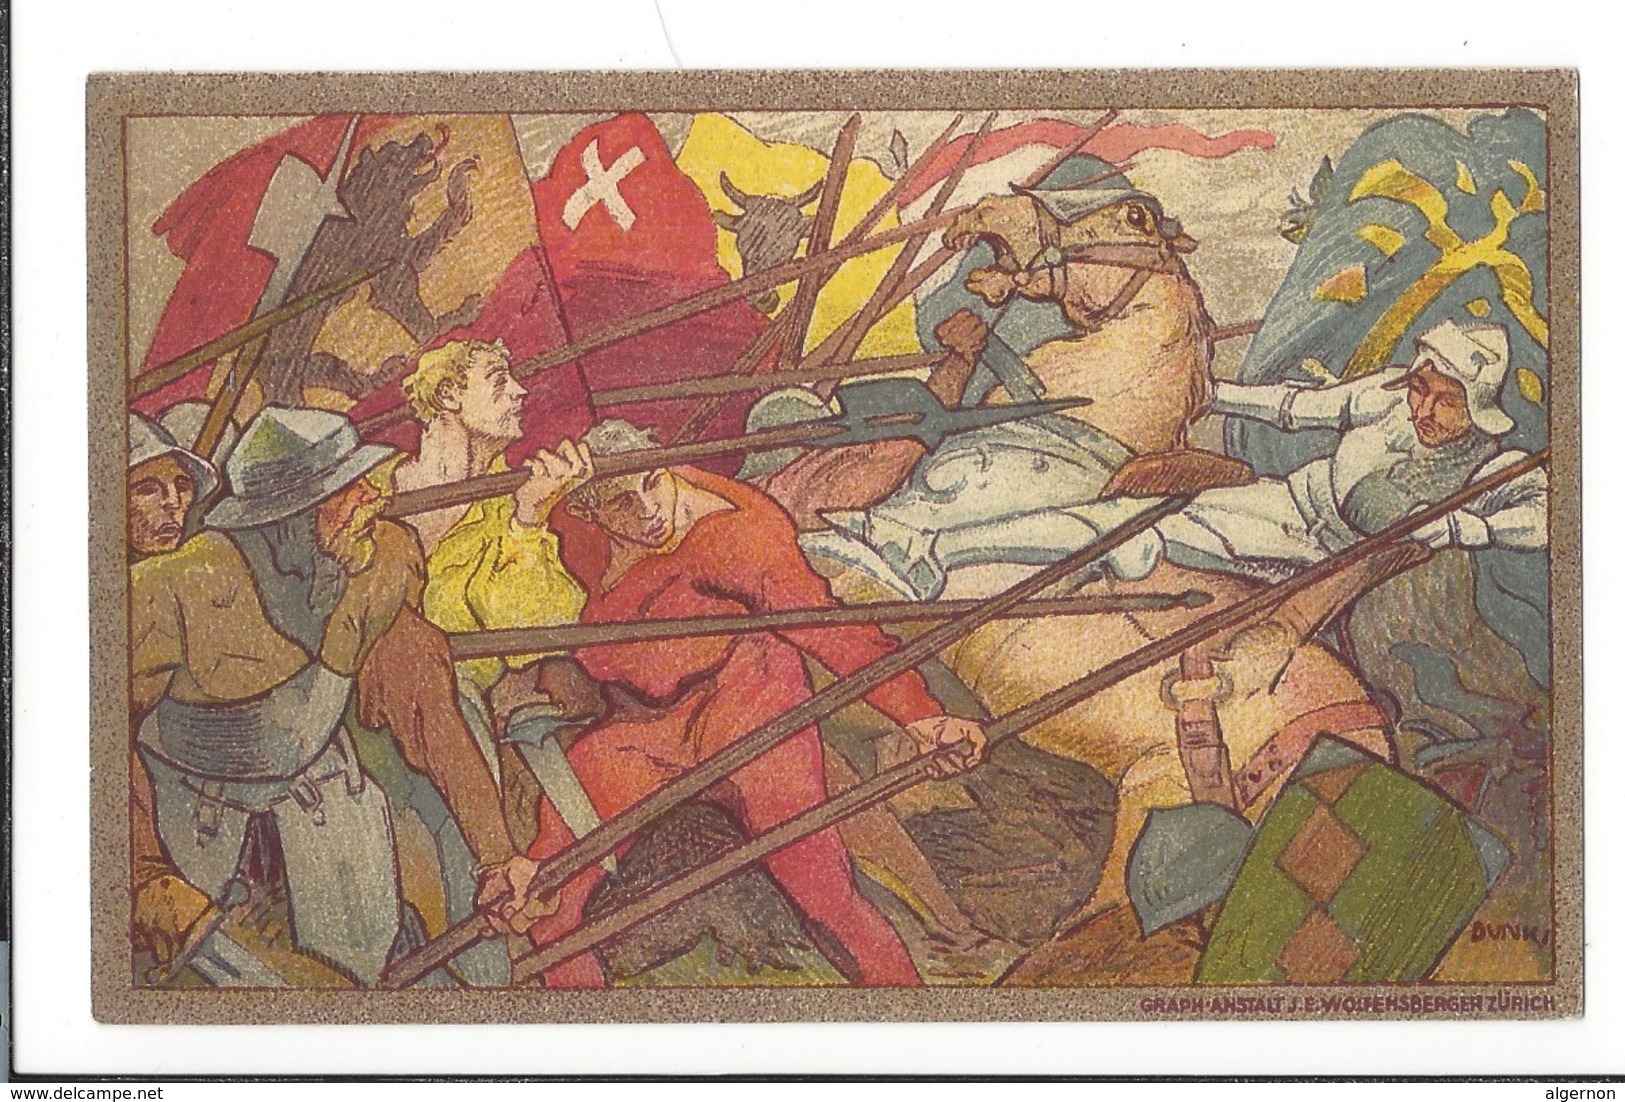 N 46 - Carte N°2 Fête Nationale 1911 Zürich 01.08.1911 Bundesfeier Postkarte - Interi Postali